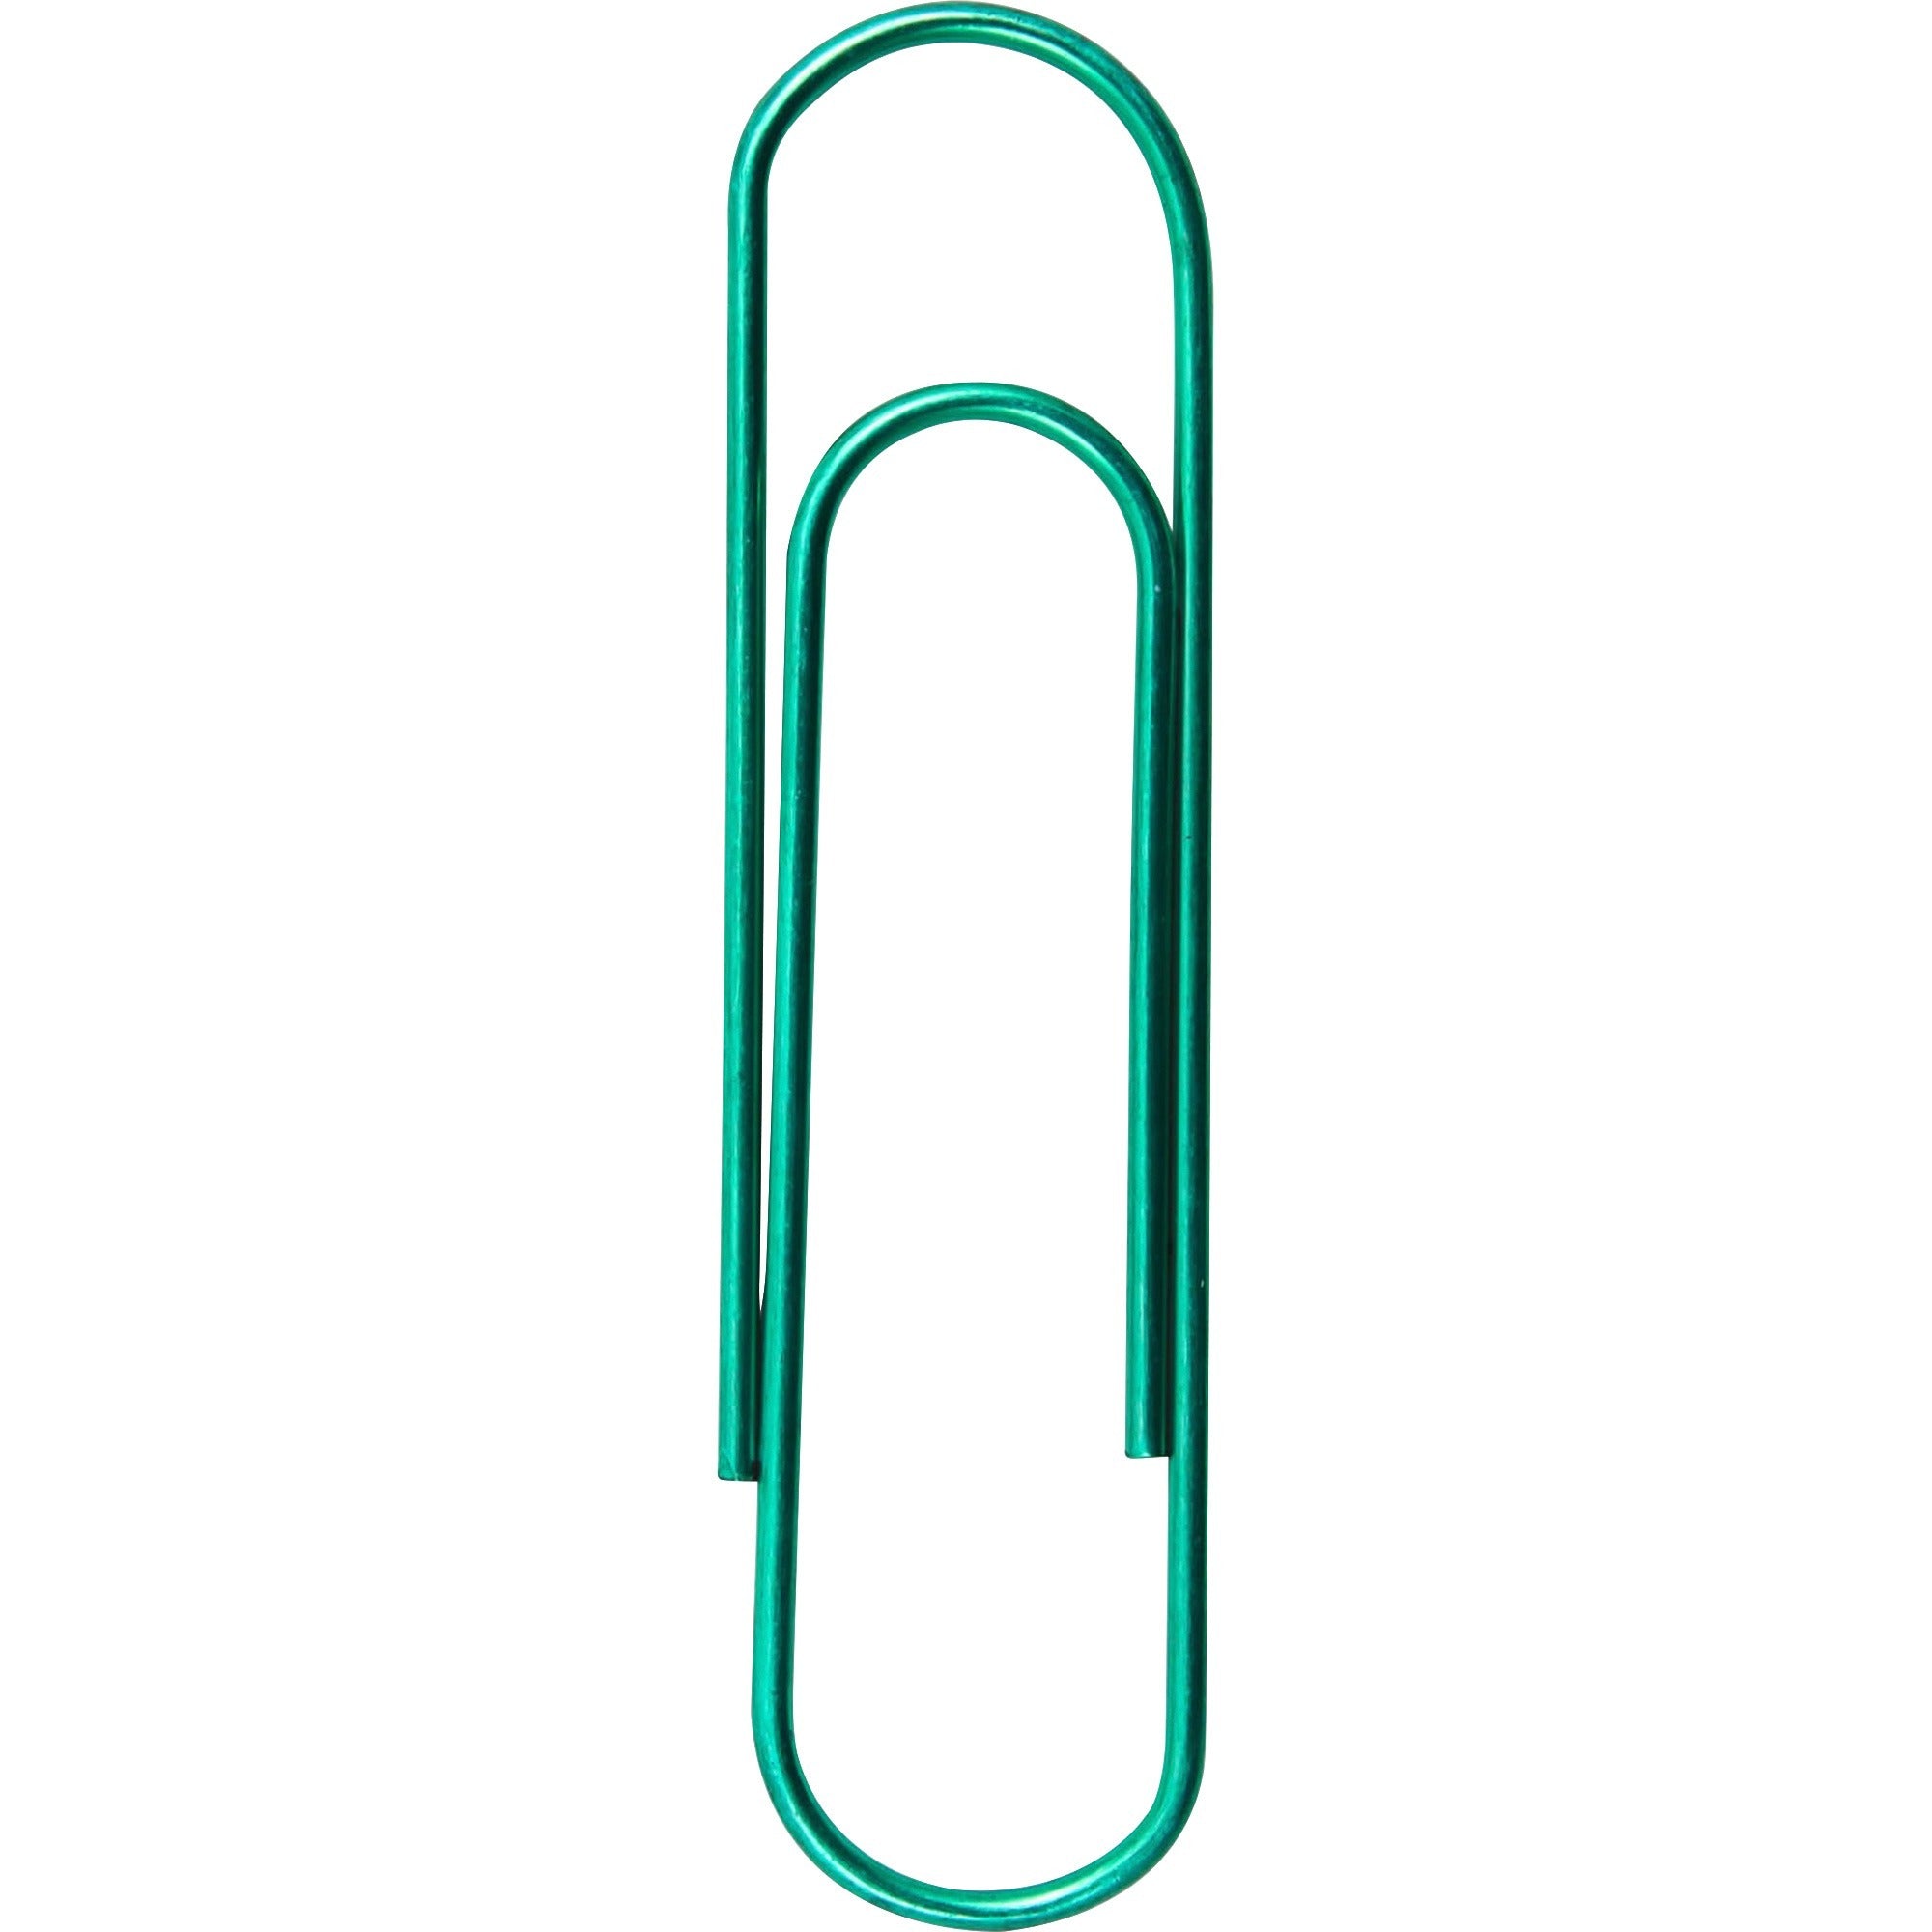 baumgartens-jumbo-metallic-paper-clips-4-length-x-1-width-1each-assorted-metal_bau26740 - 2